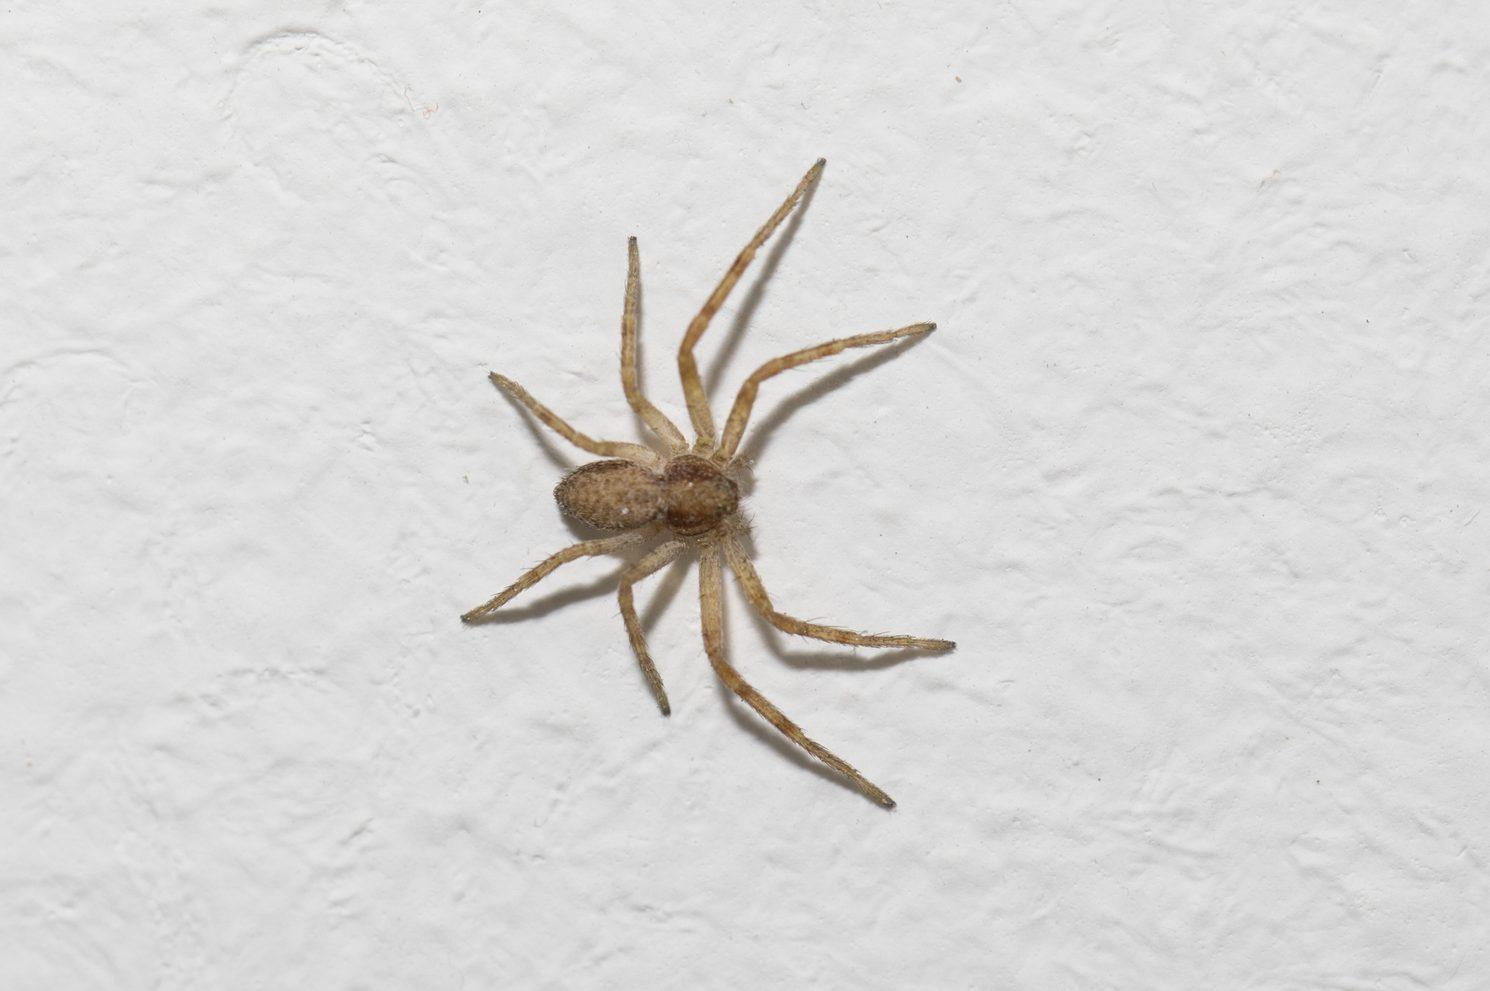 common house spiders